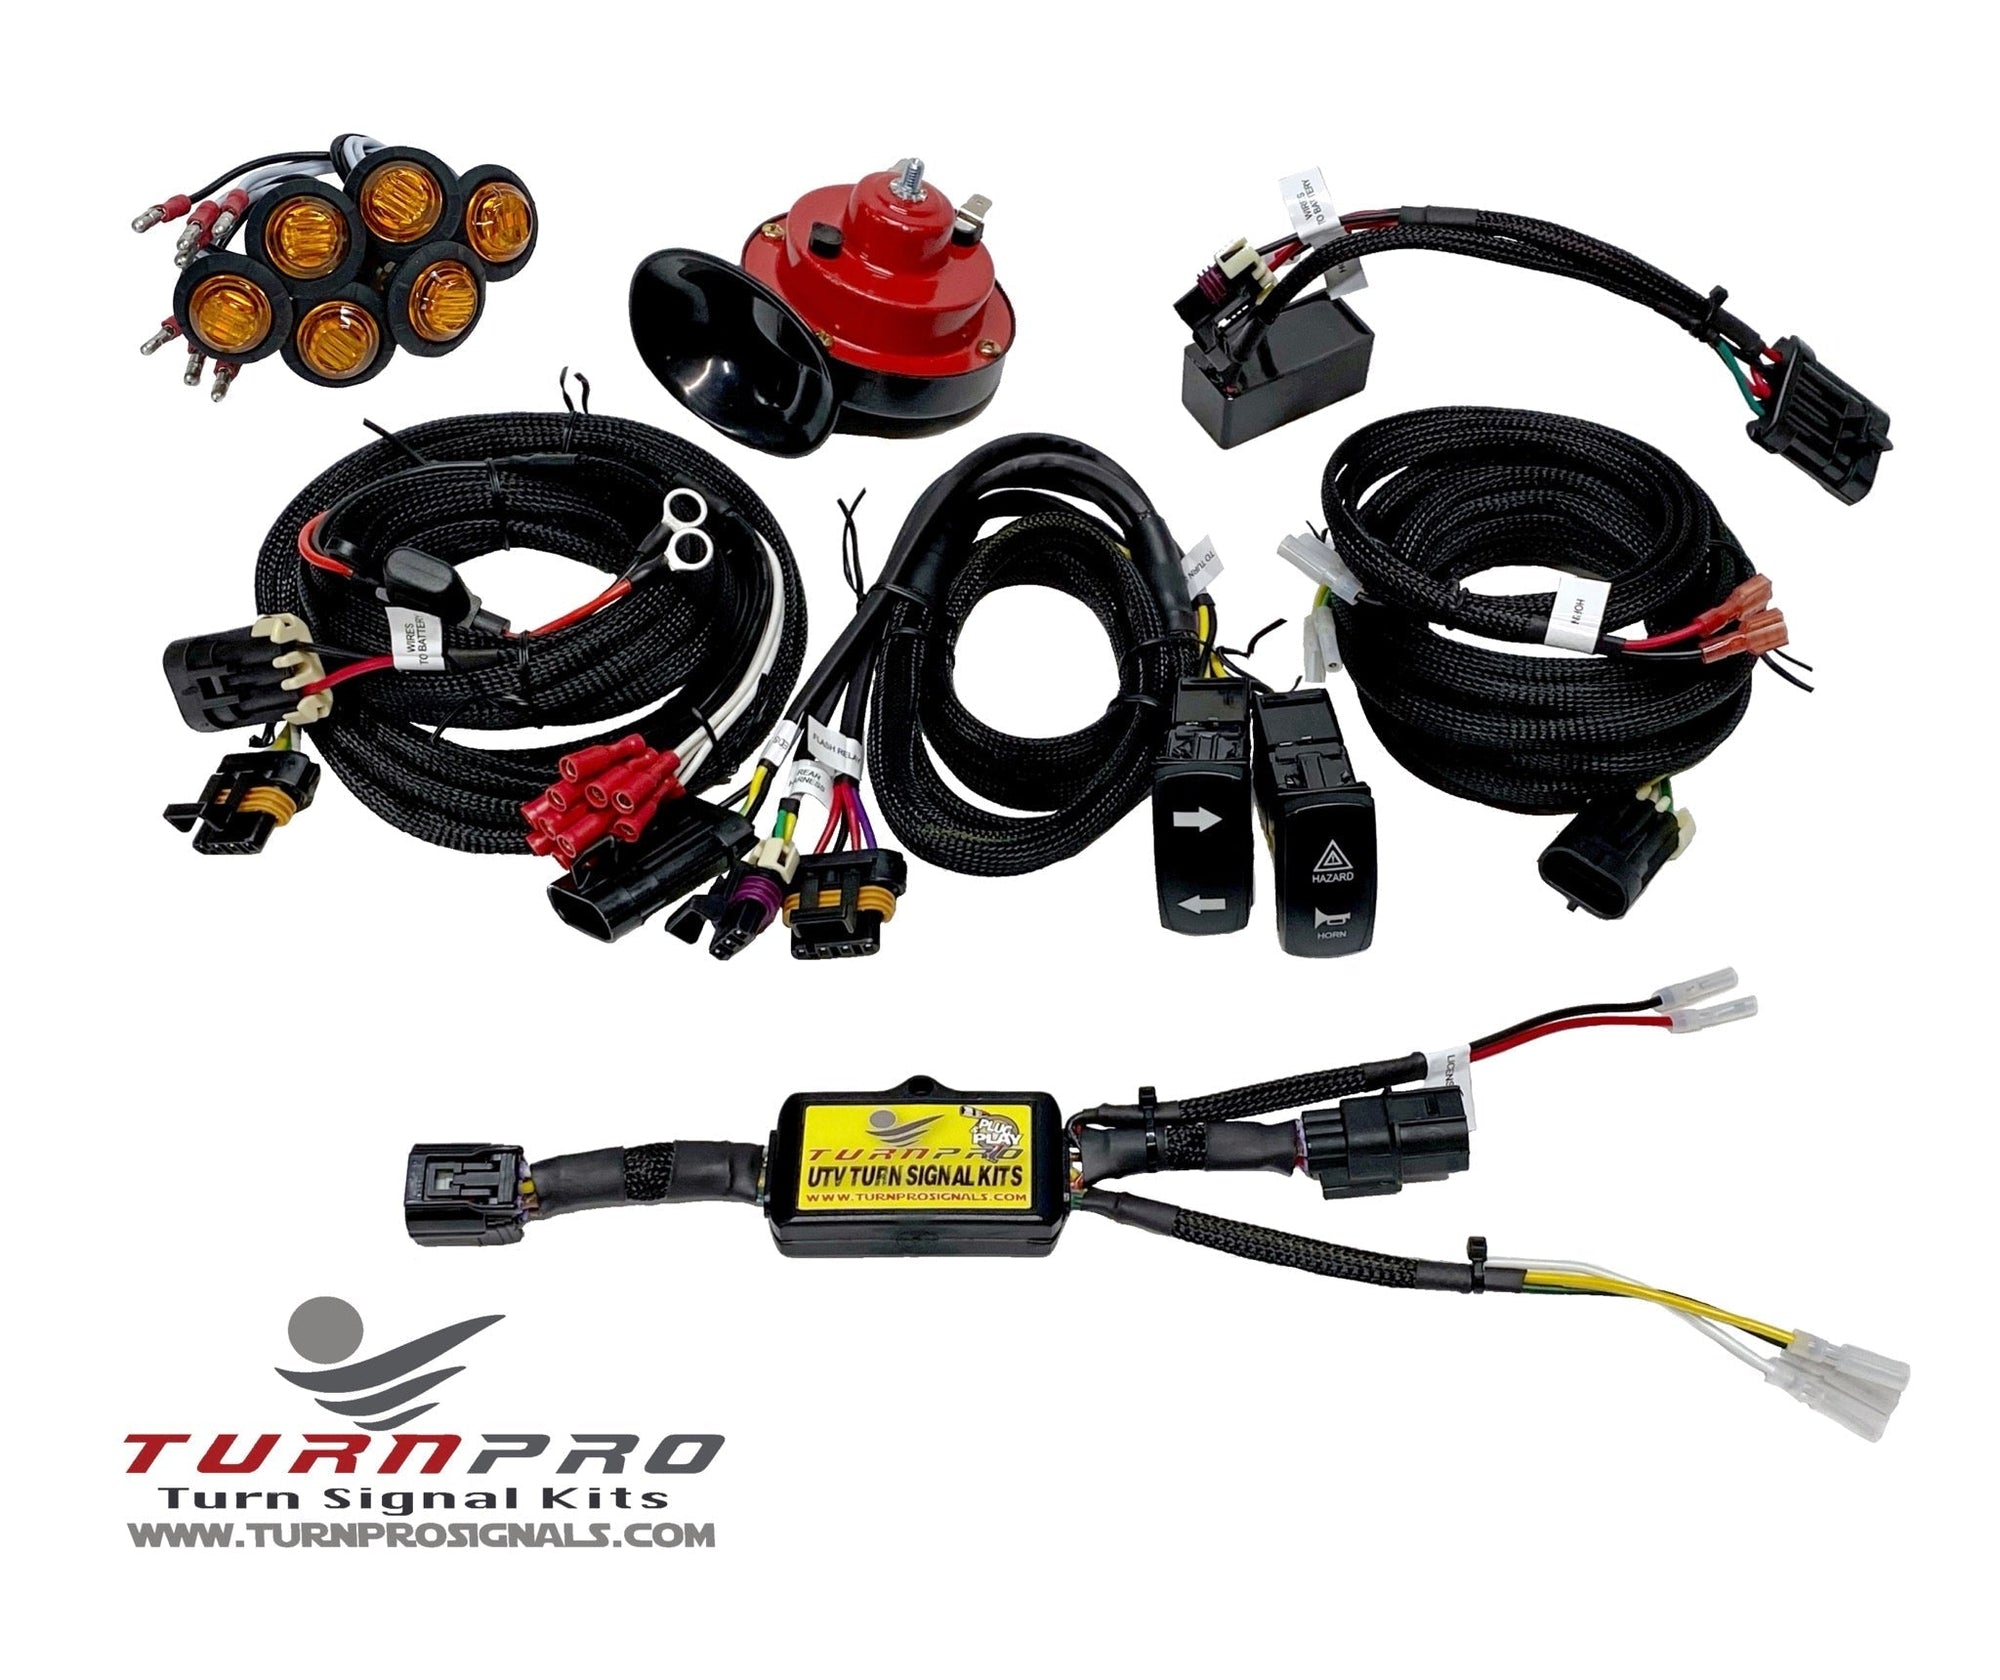 NEW - Honda Pioneer 520 / 700 / 1000 Models Plug & Play Signal System